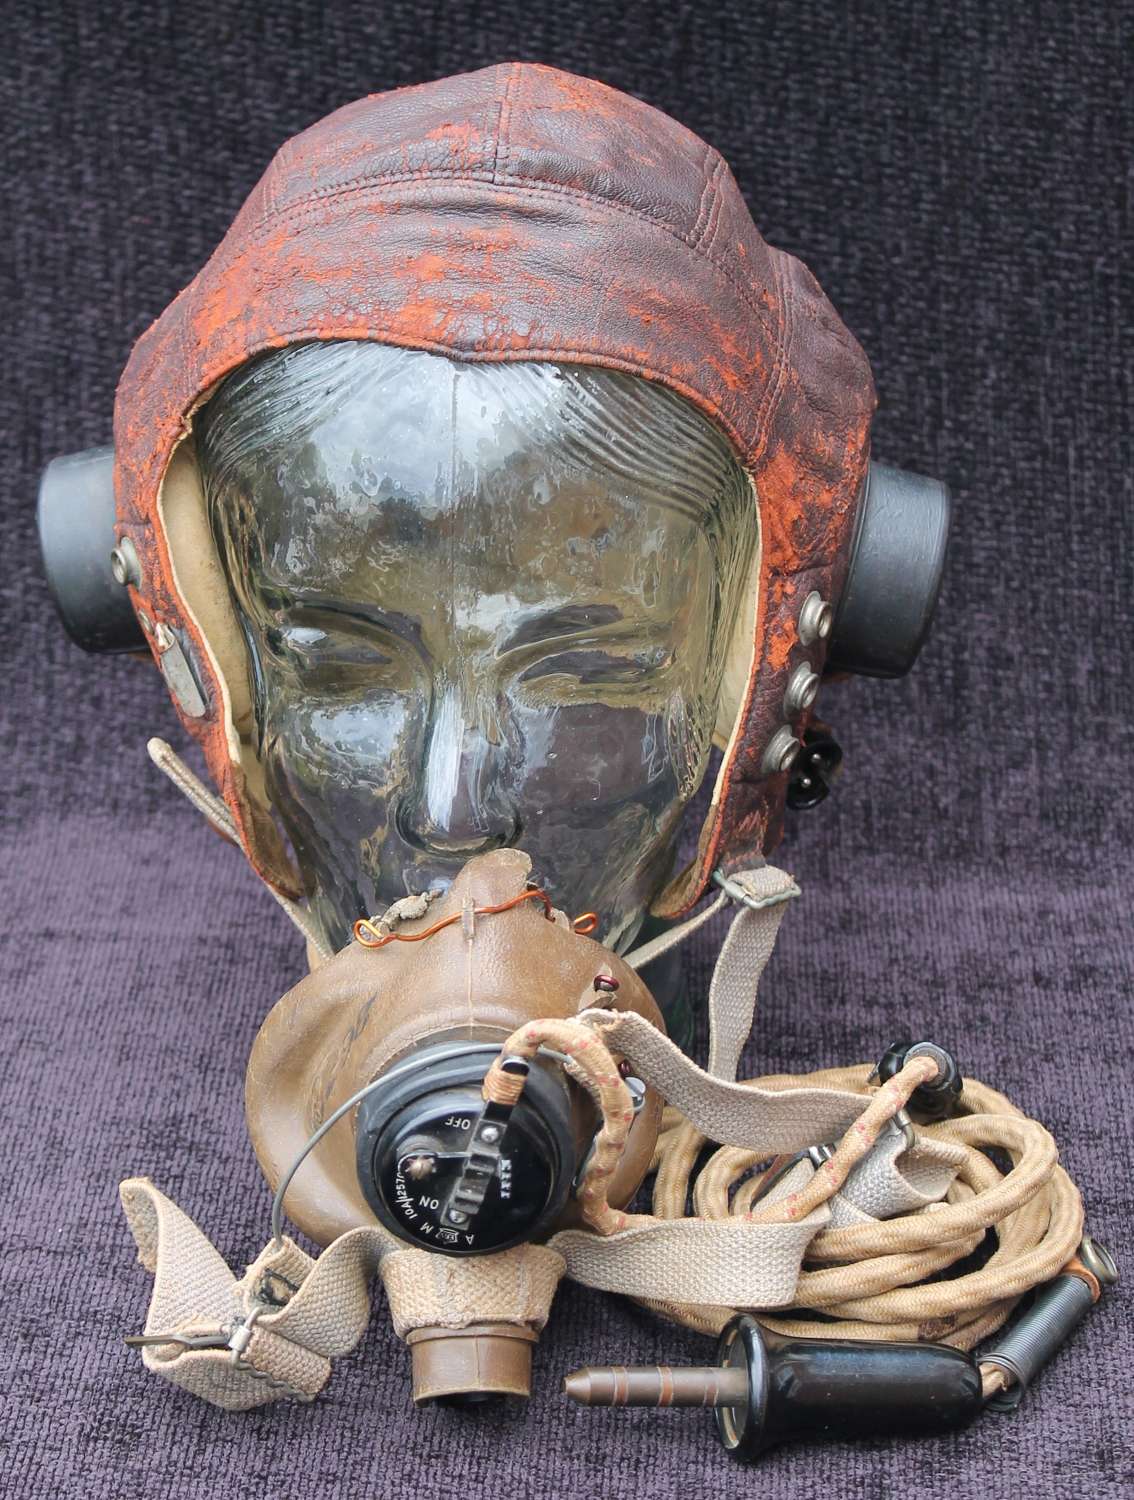 Type C Flying Helmet And G Type Oxygen Mask